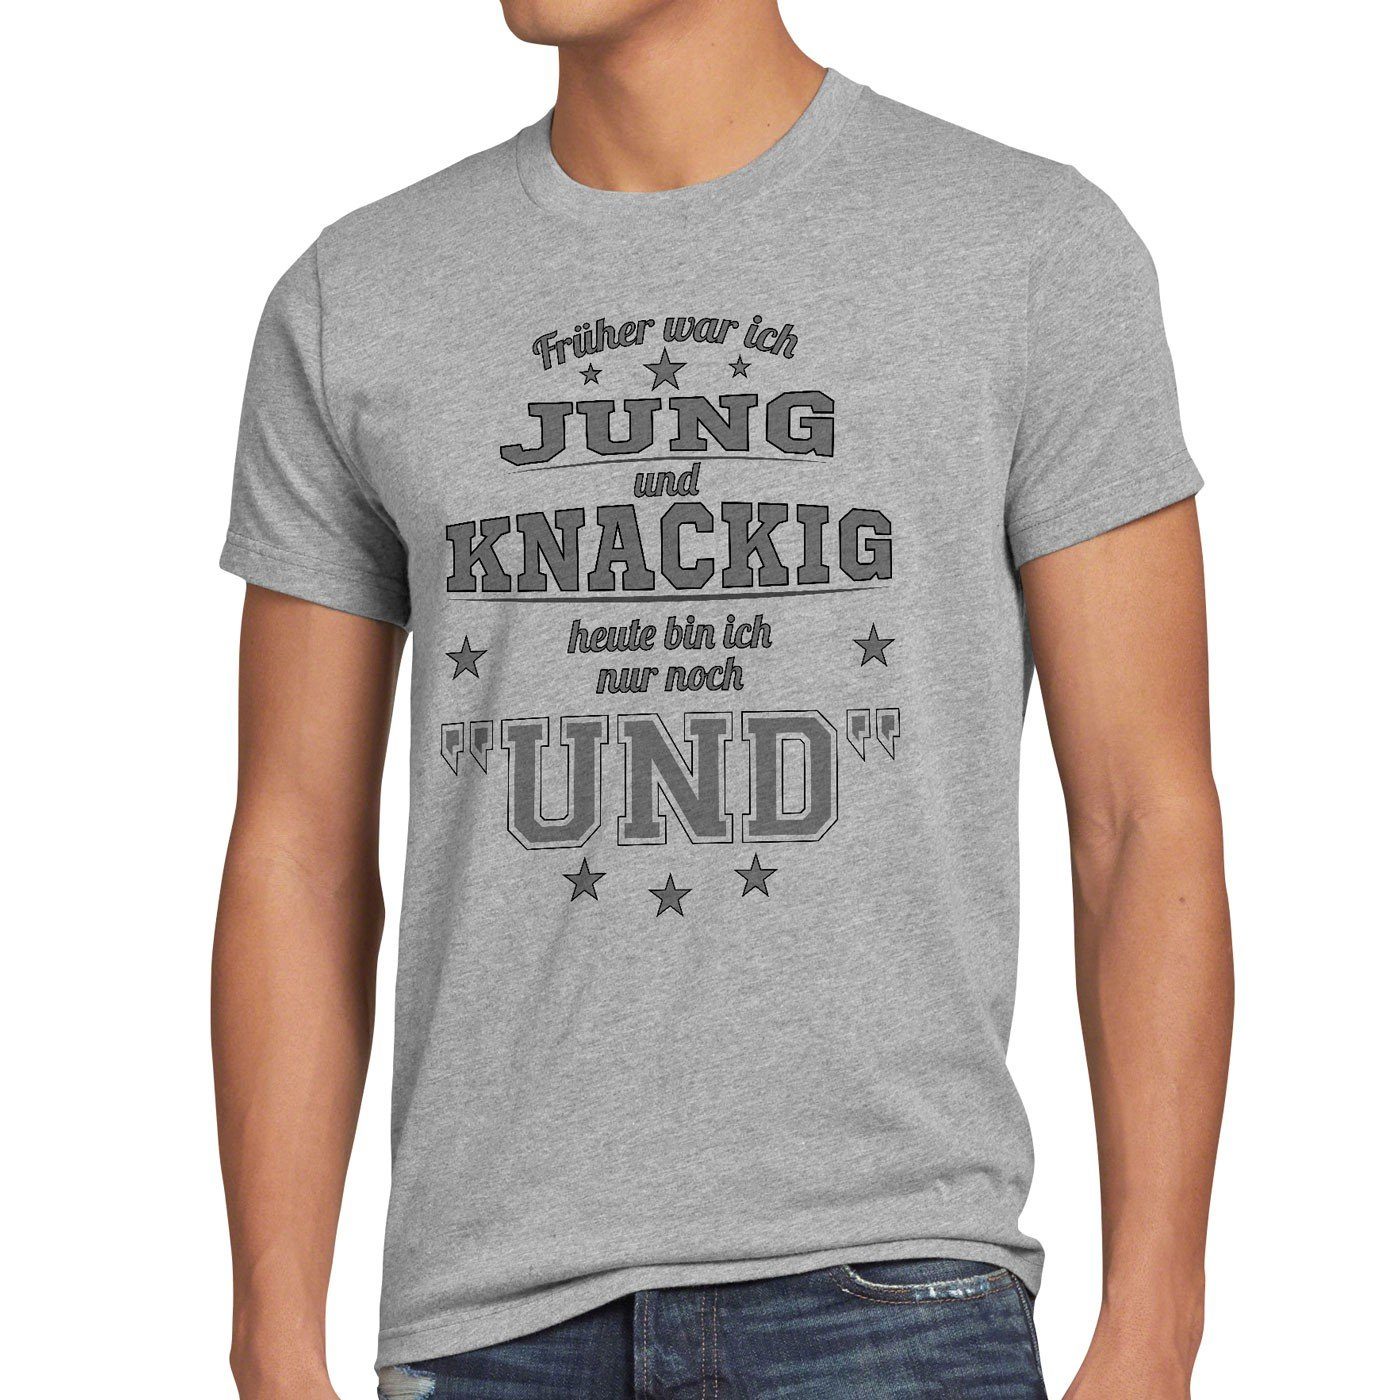 style3 Print-Shirt Herren T-Shirt Früher Jung und Knackig heute nur Funshirt Spruch shirt Fun Gag grau meliert